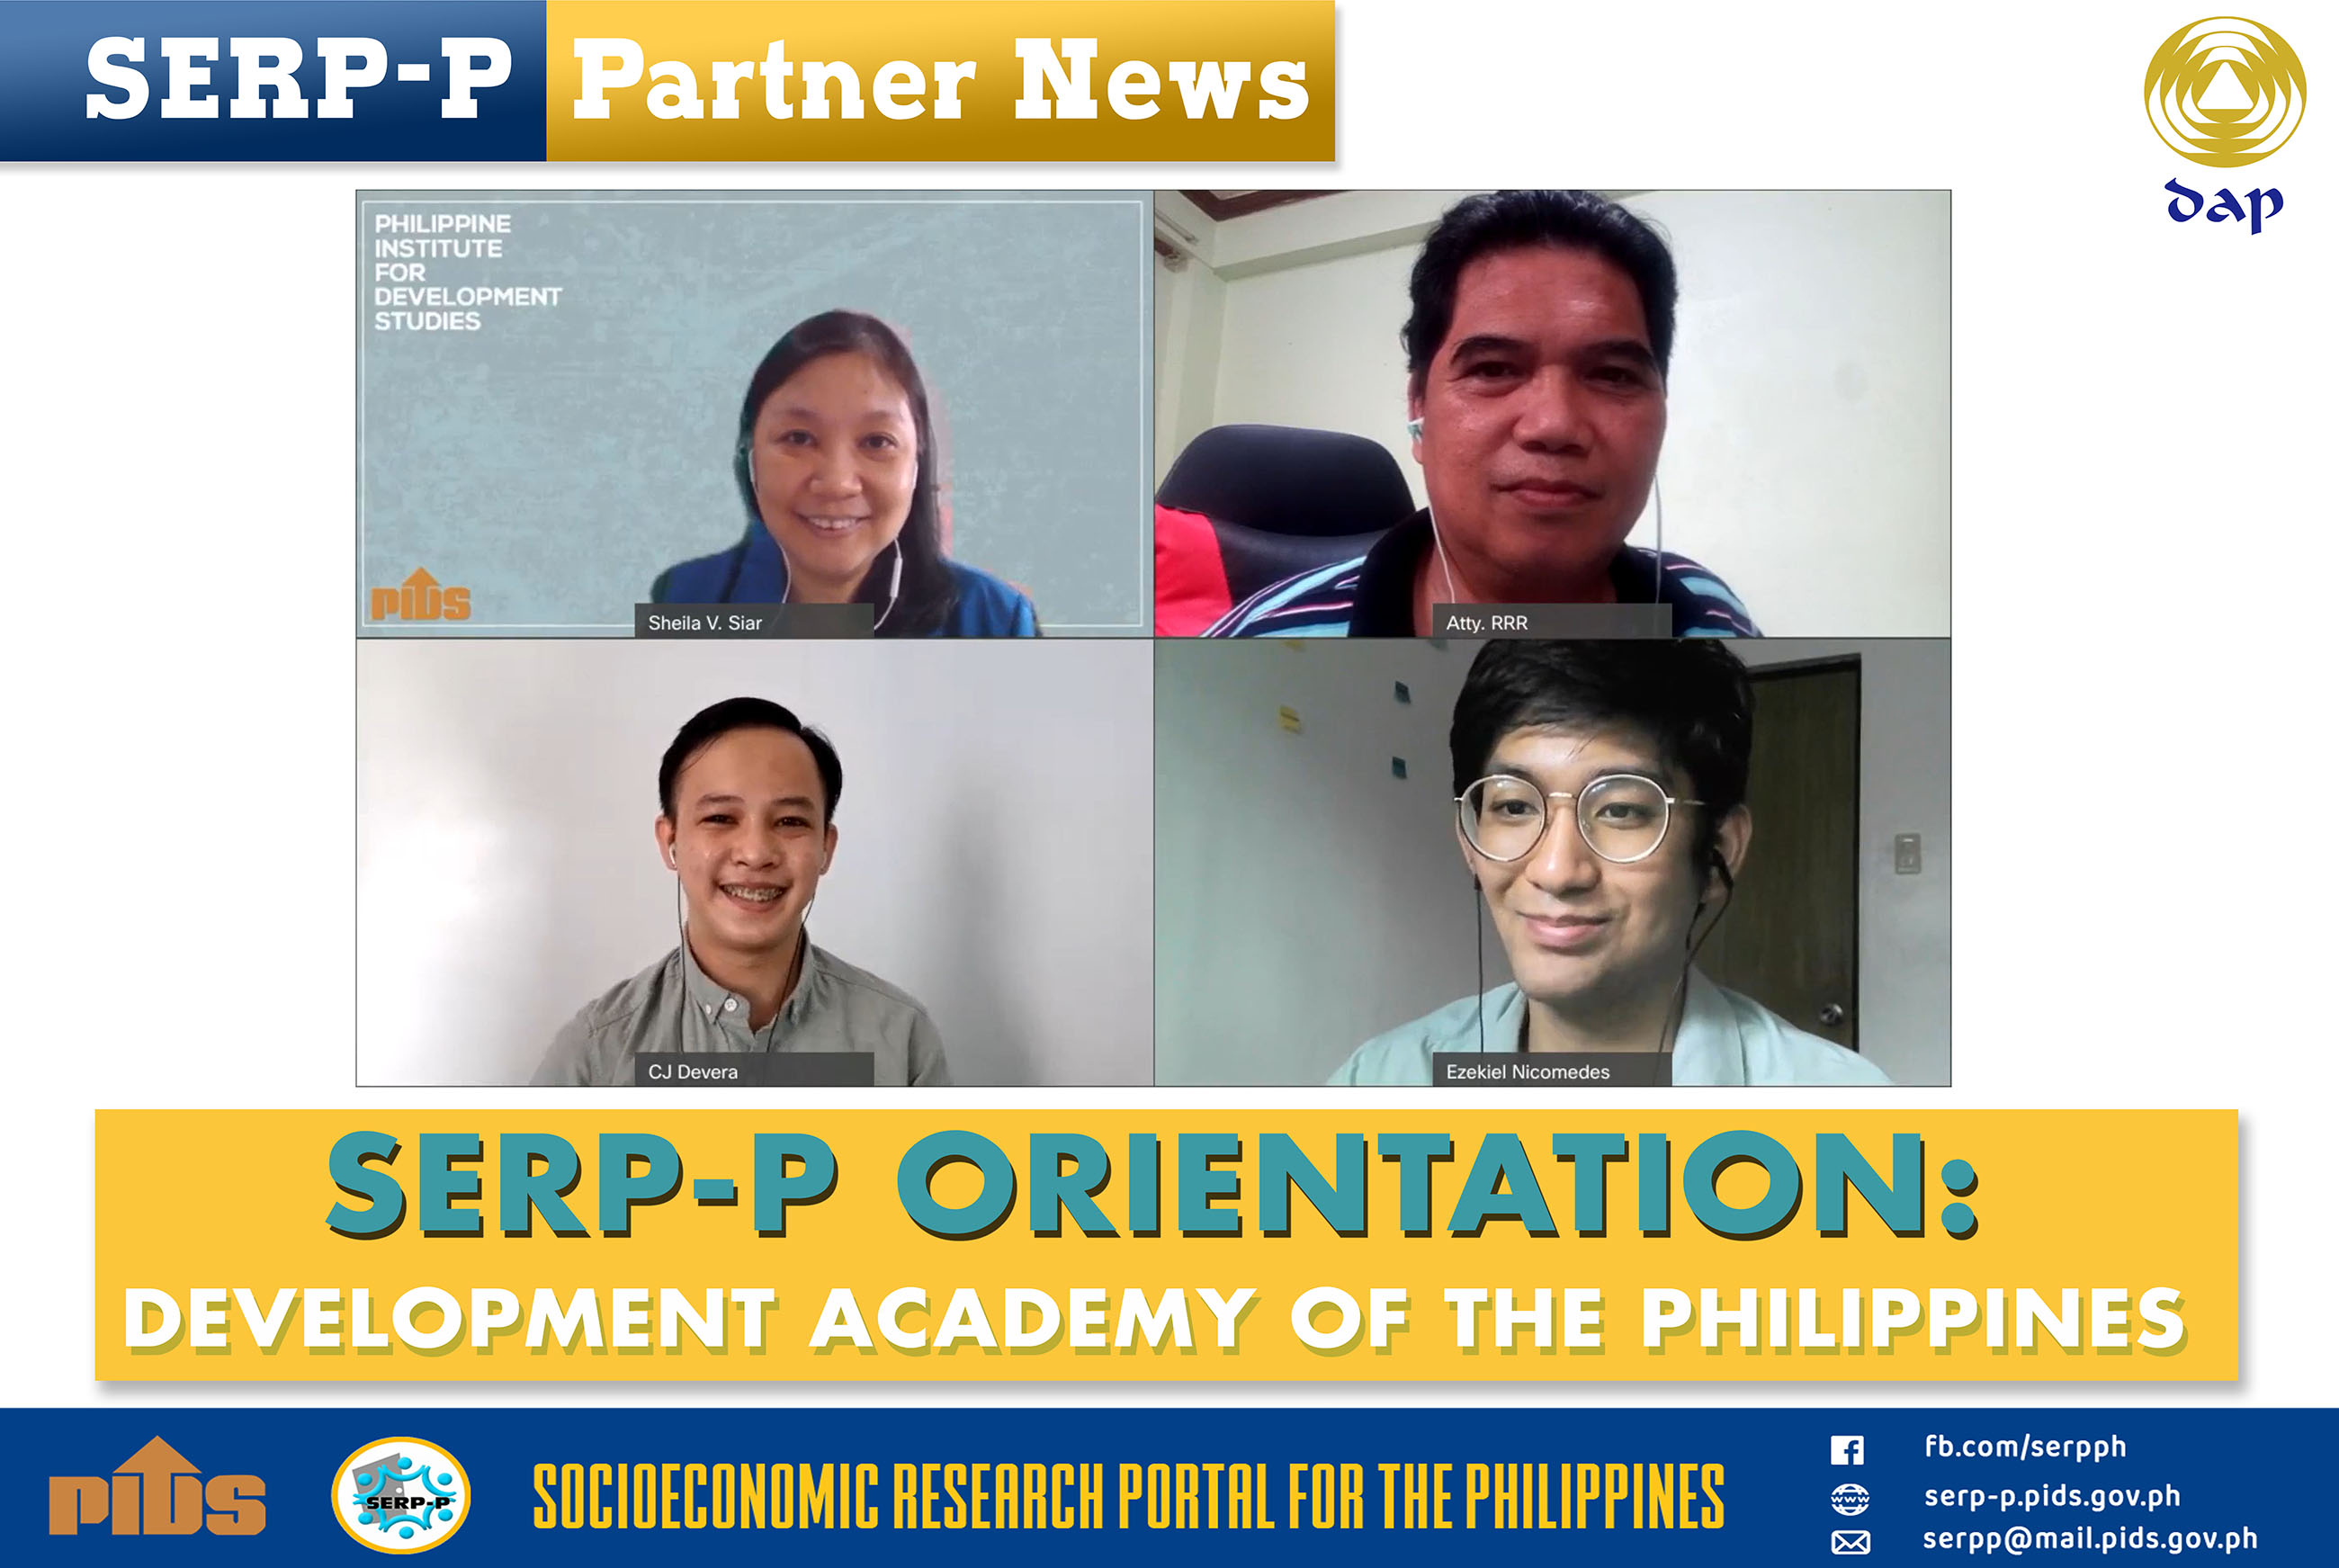 ERP-P Orientation with Development Academy of the Philippines-serp-p dap.jpg